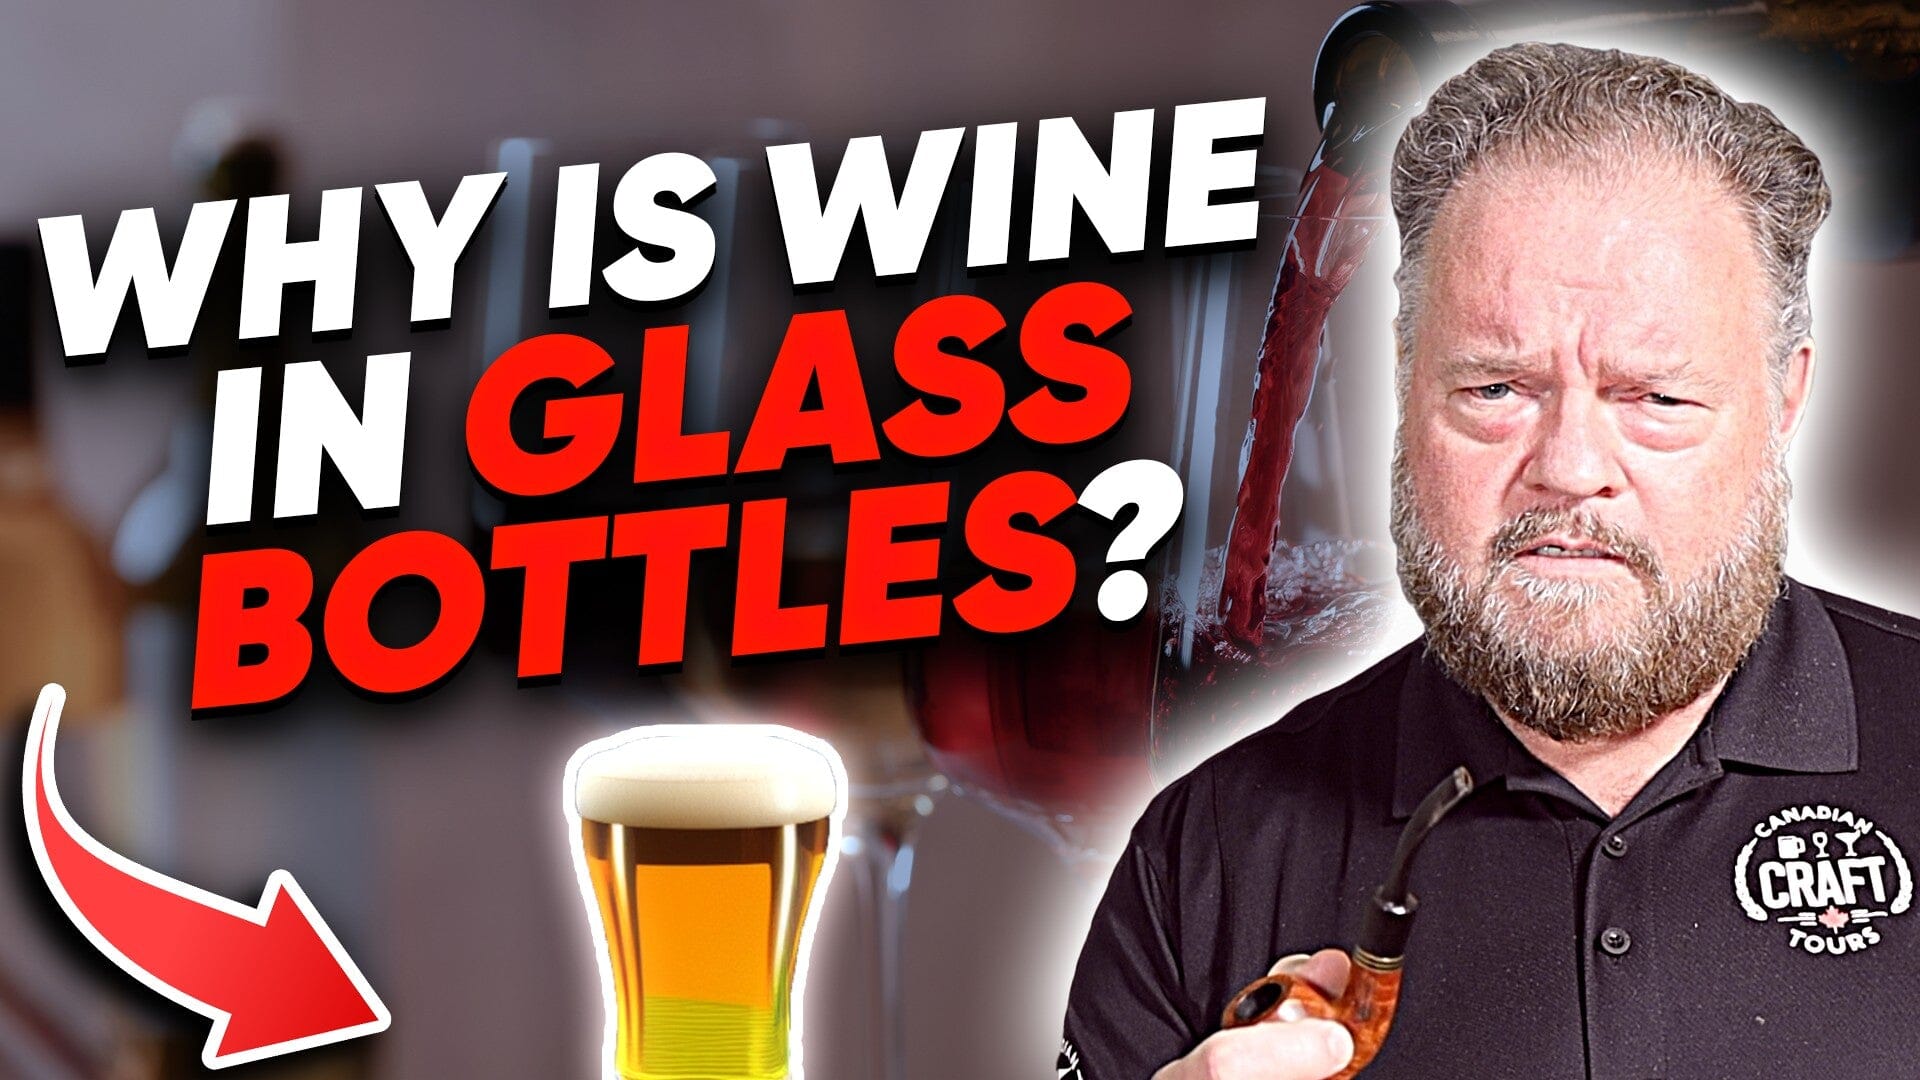 Why Do We Buy Wine In 750ml Bottles?